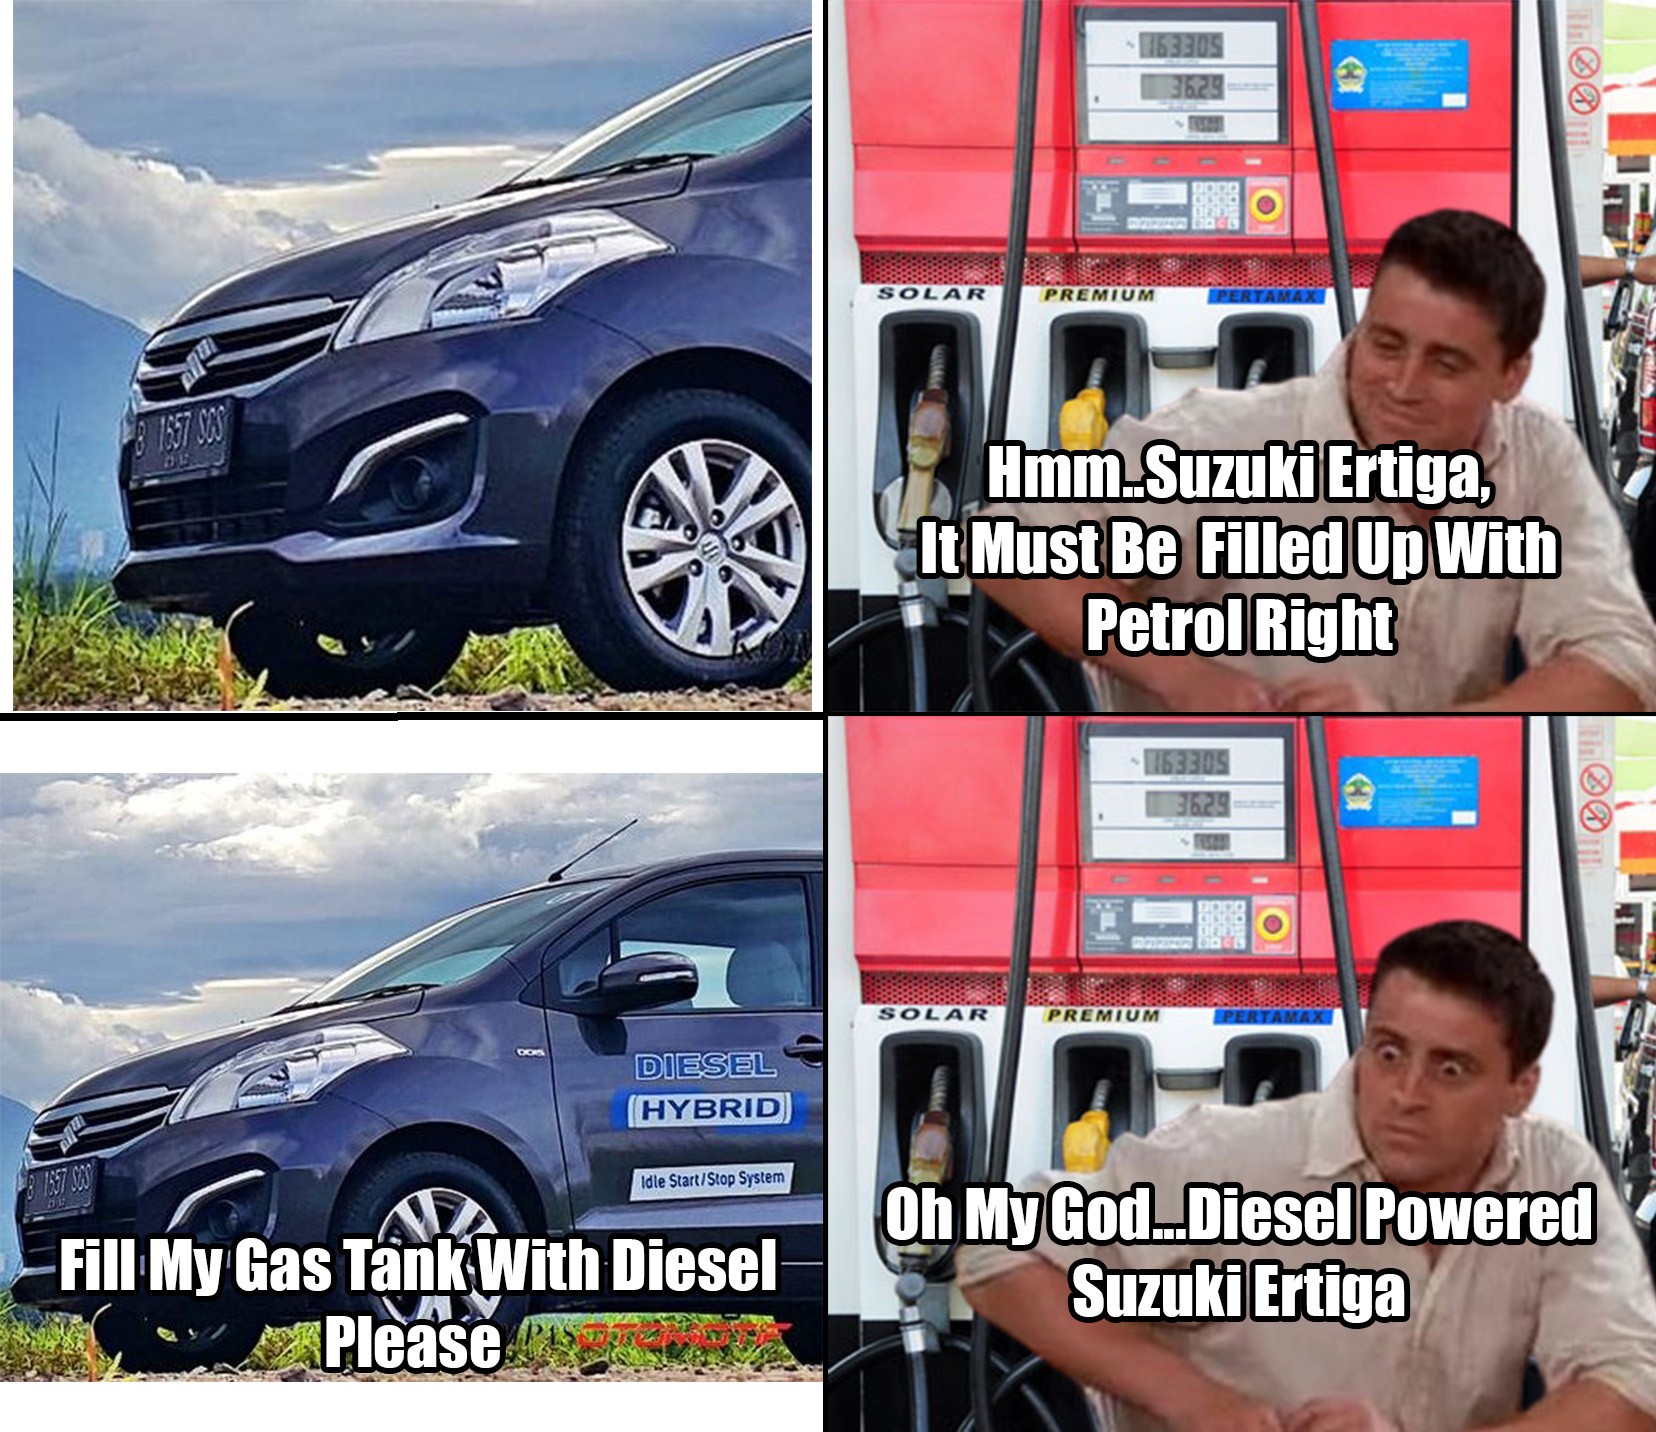 In Indonesia, Diesel Powered Suzuki Ertiga is rarer than the gasoline powered ones